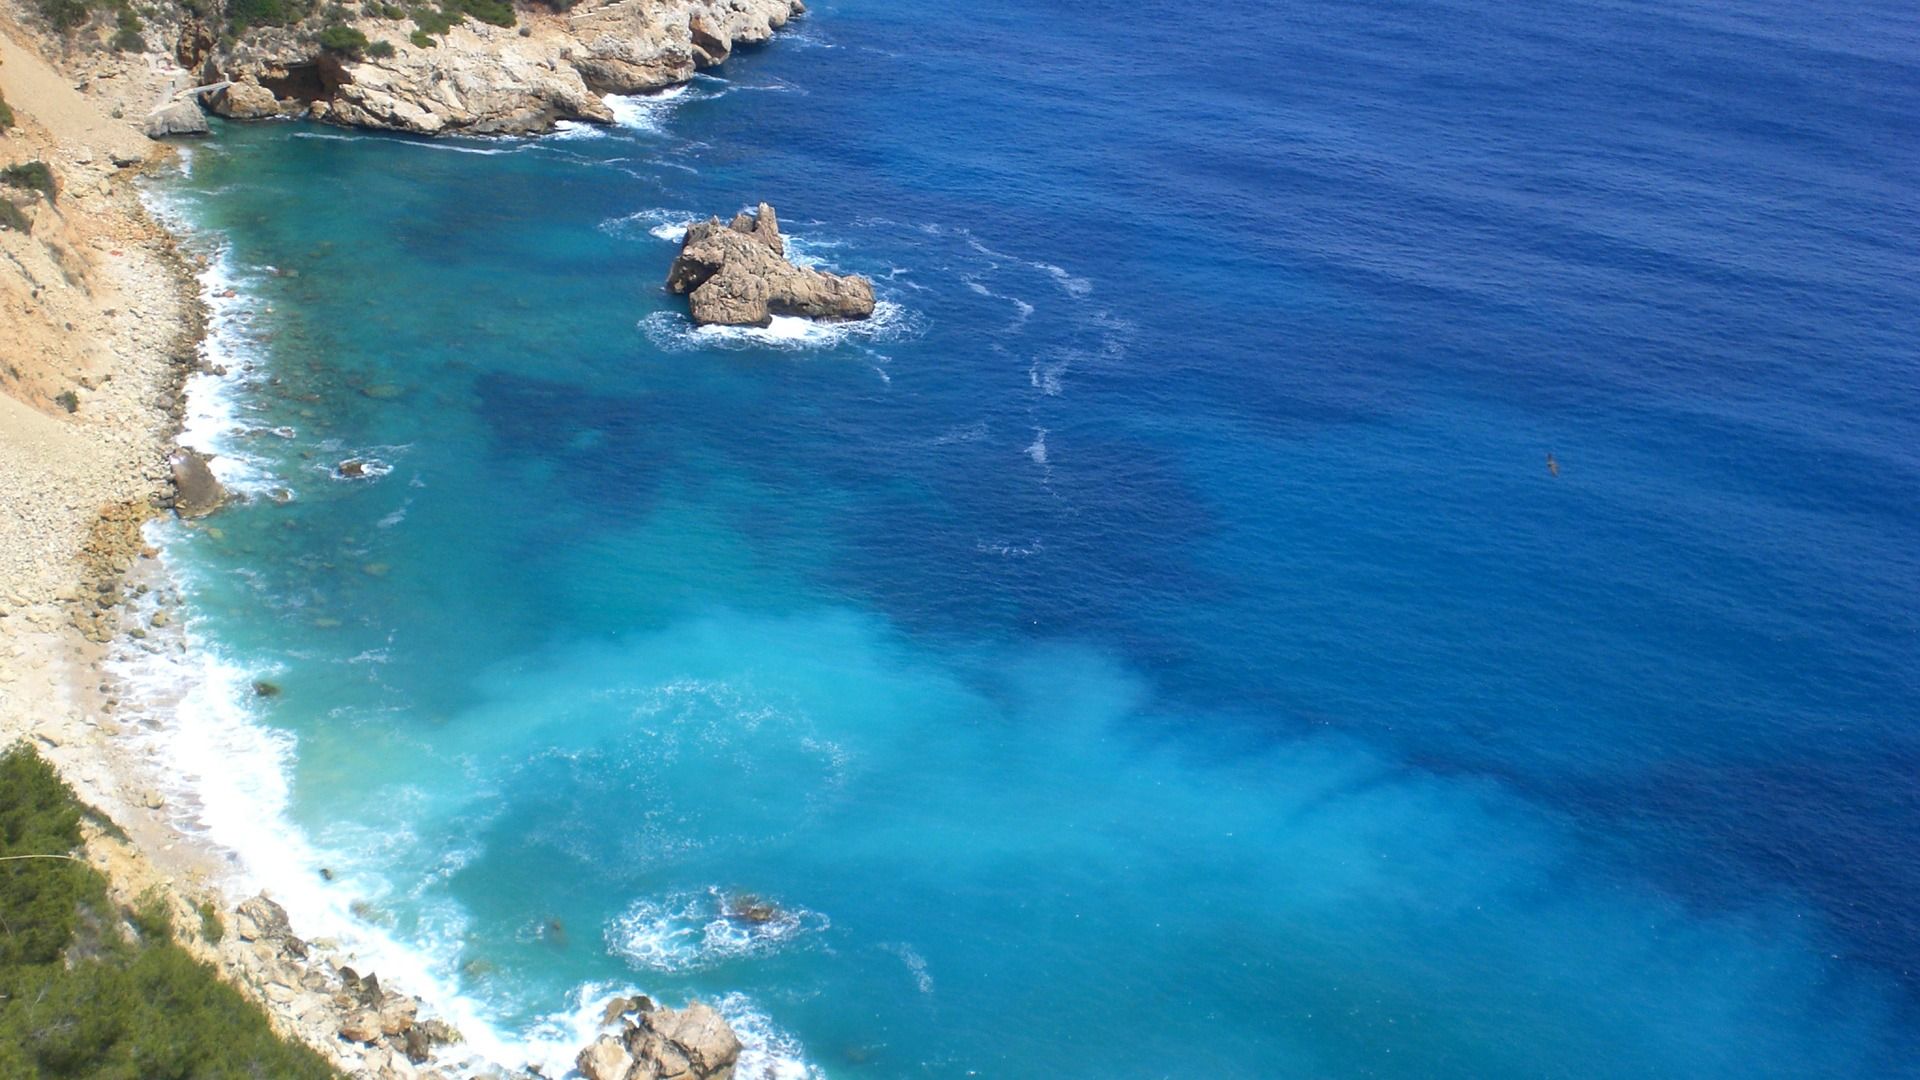 Fondos de pantalla de mar mediterráneo fondos de naturaleza en formato jpg